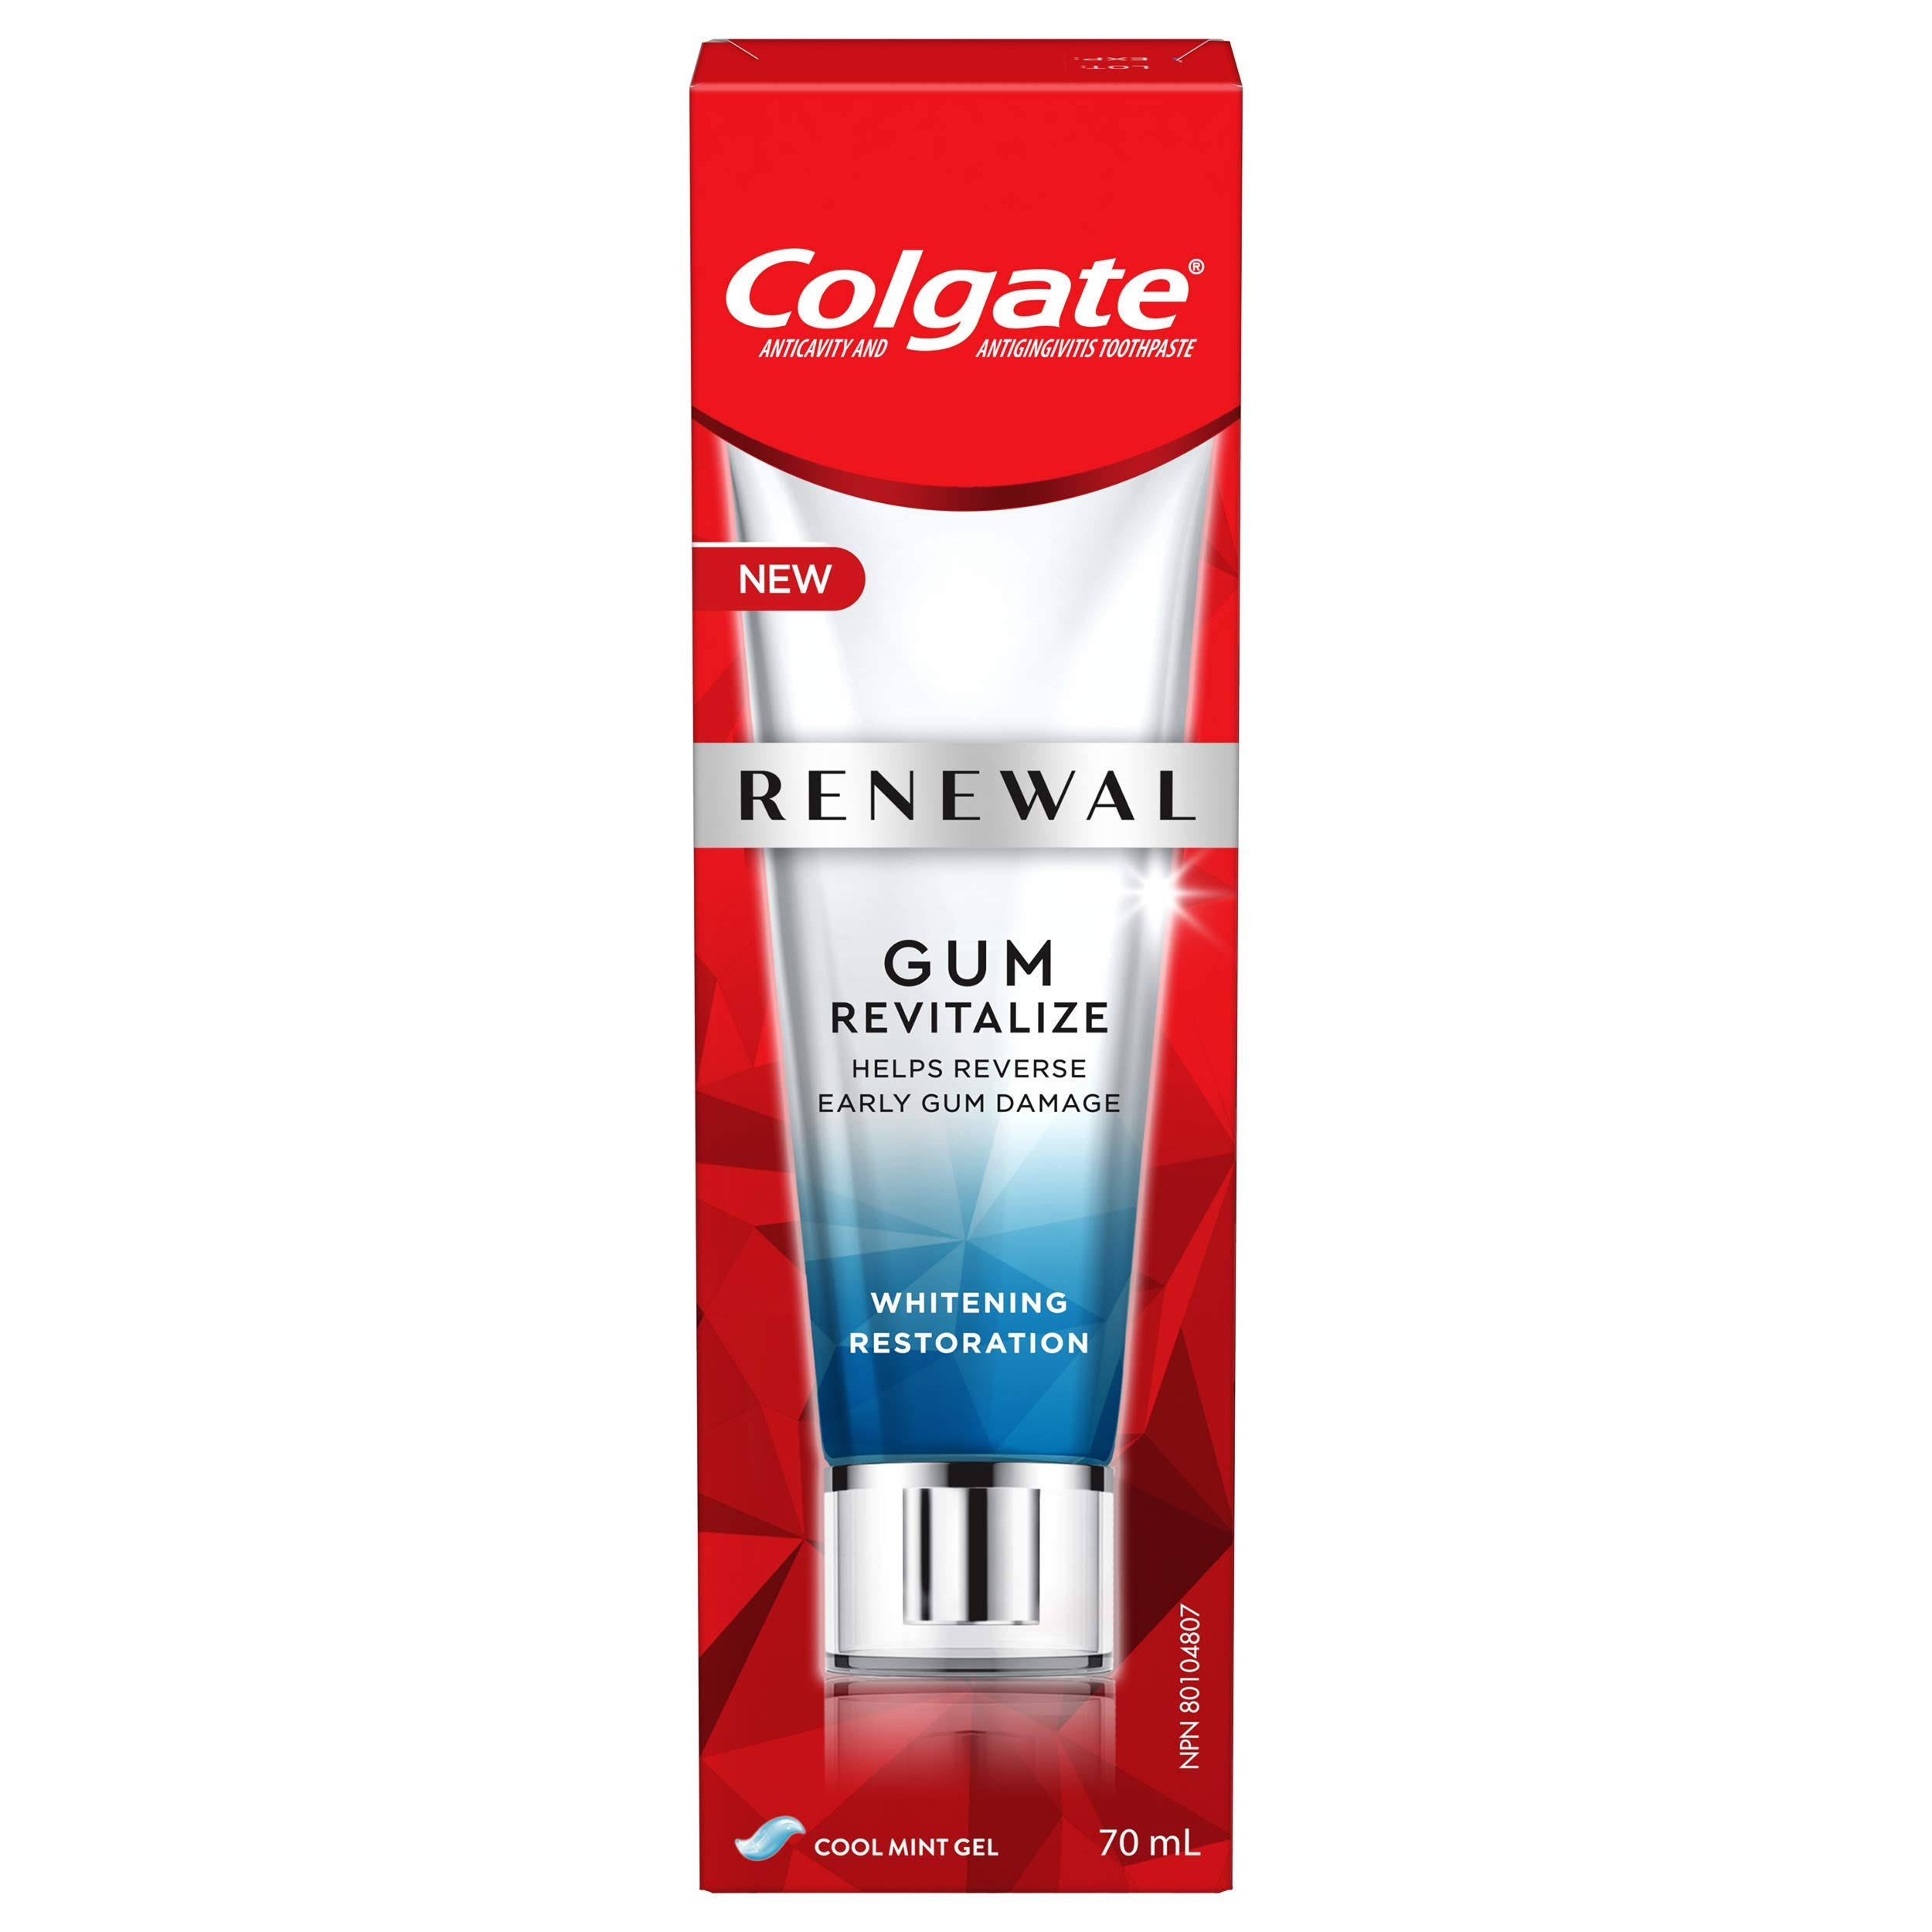 Colgate Renewal Gum Revitalize Toothpaste, Whitening Restoration - Cool Mint Gel Formula (70 Ml)